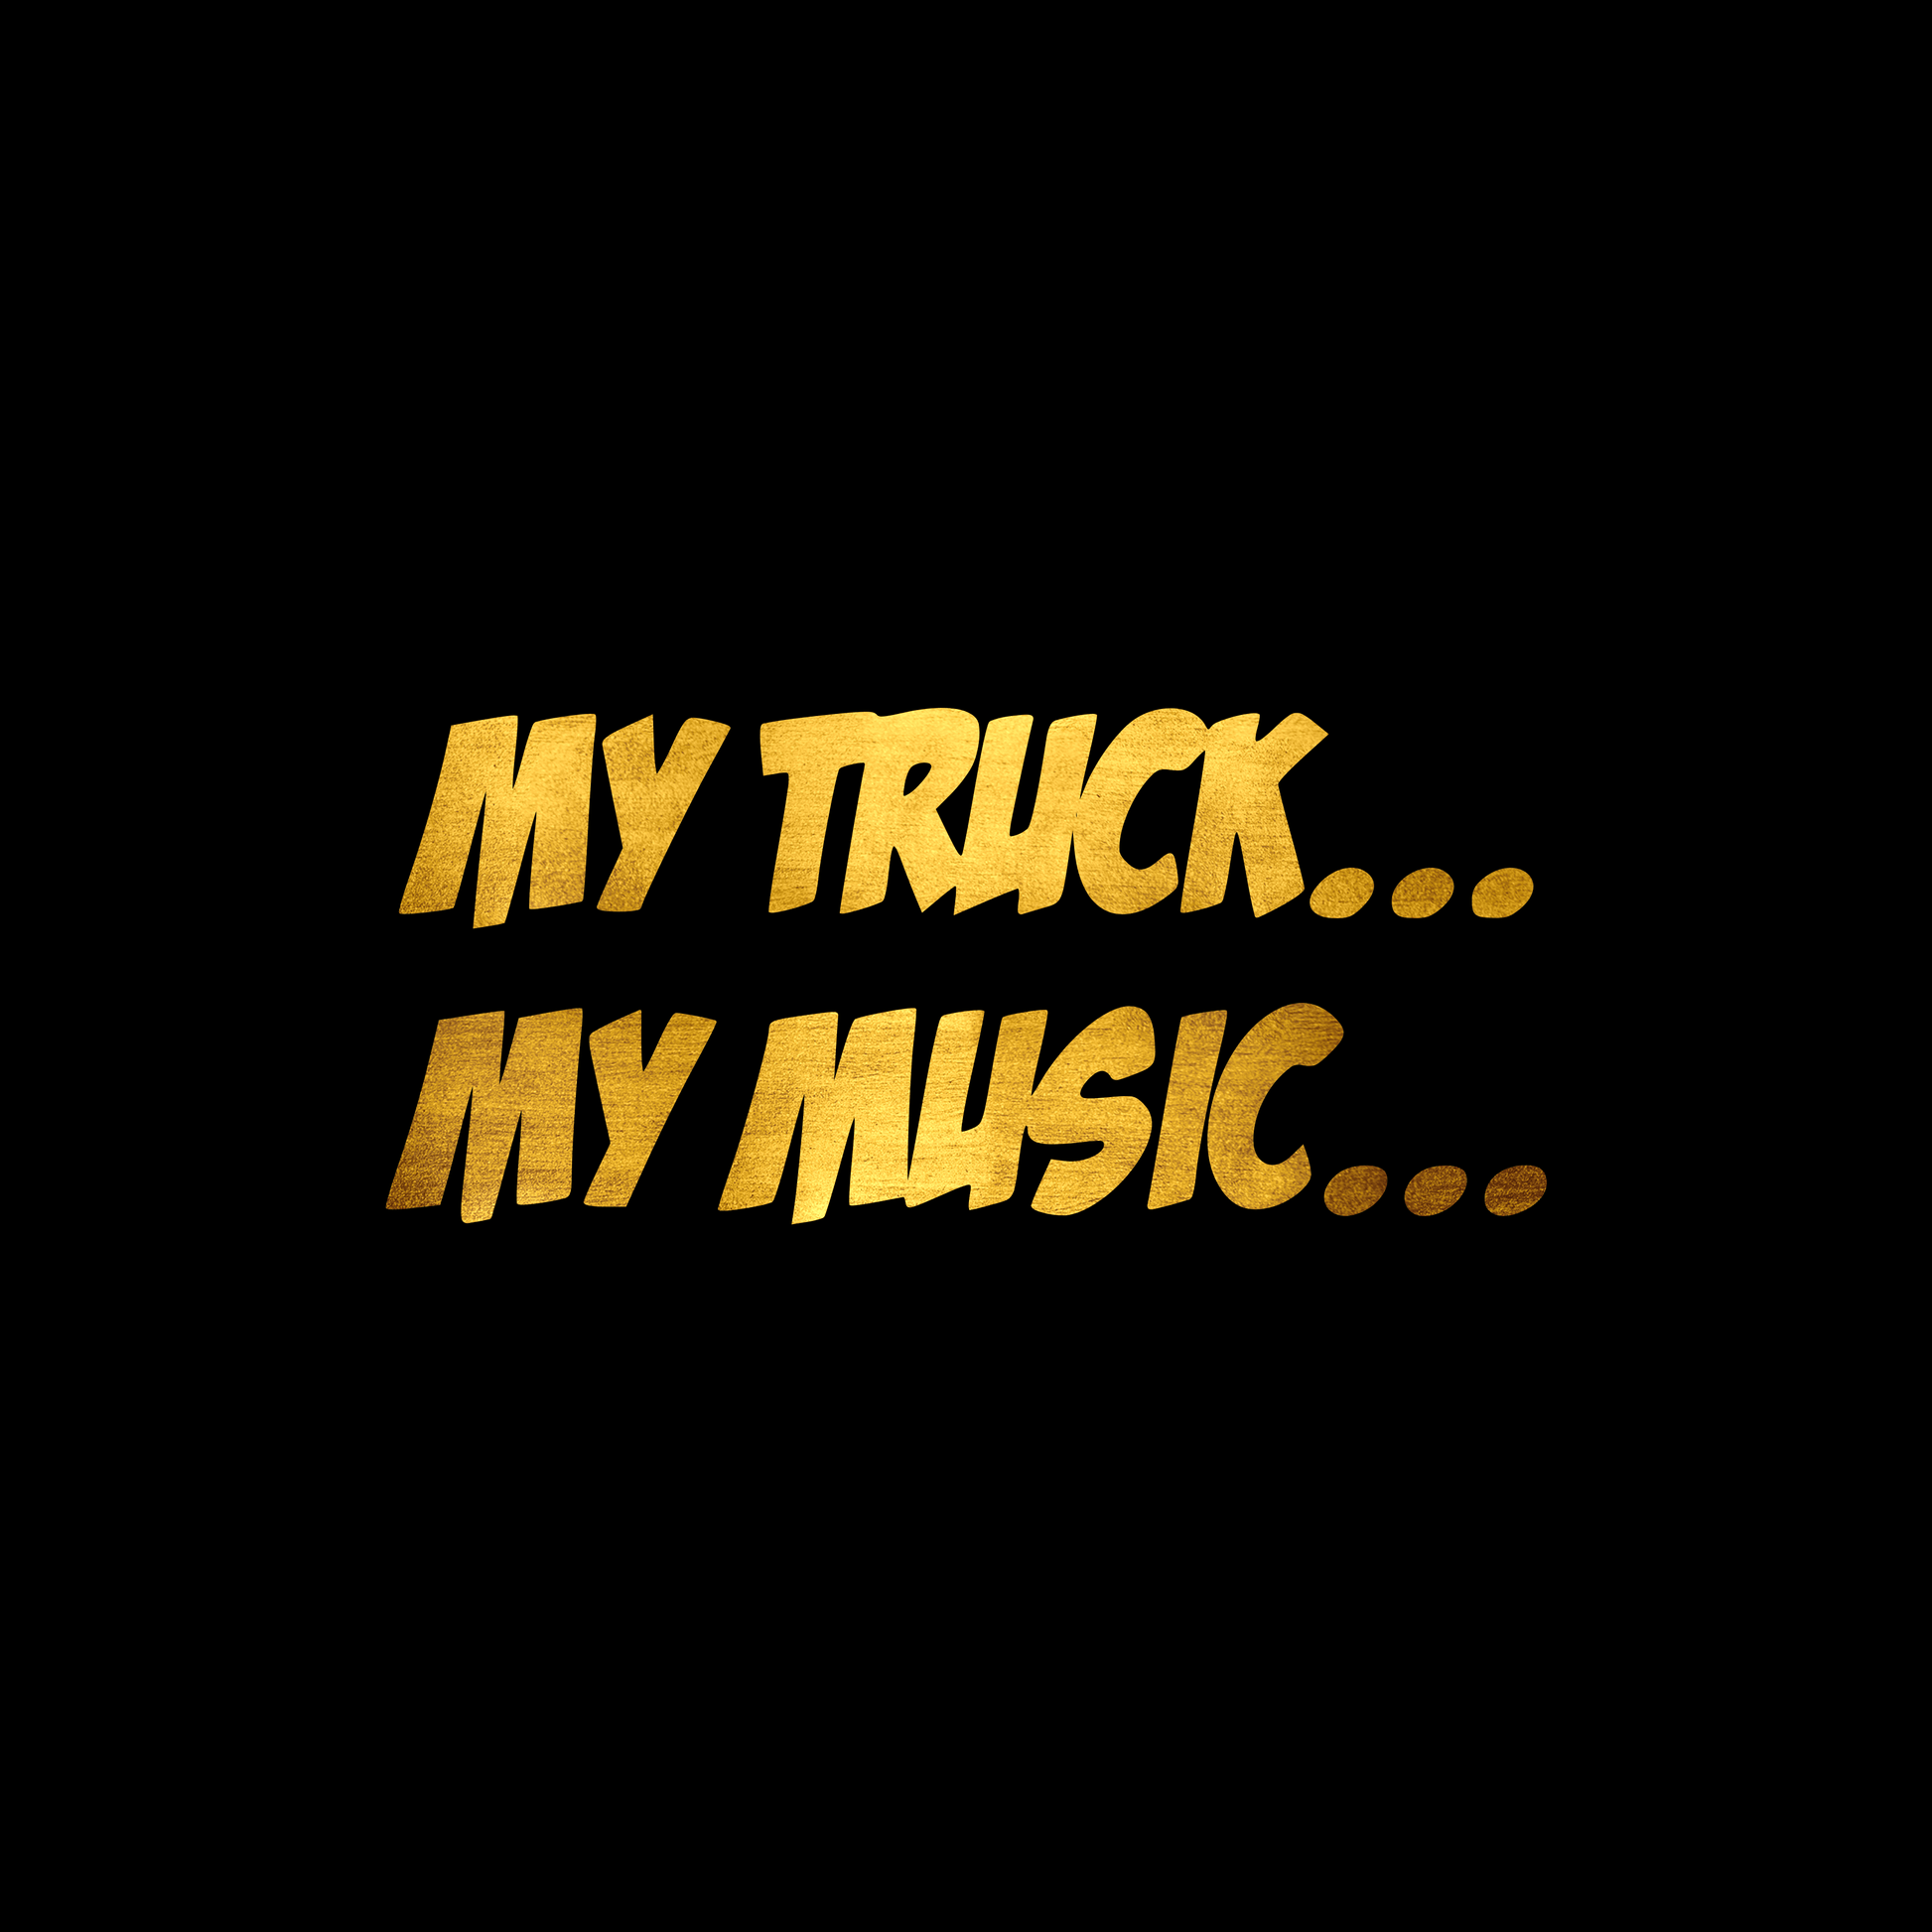 My truck my music sticker decal